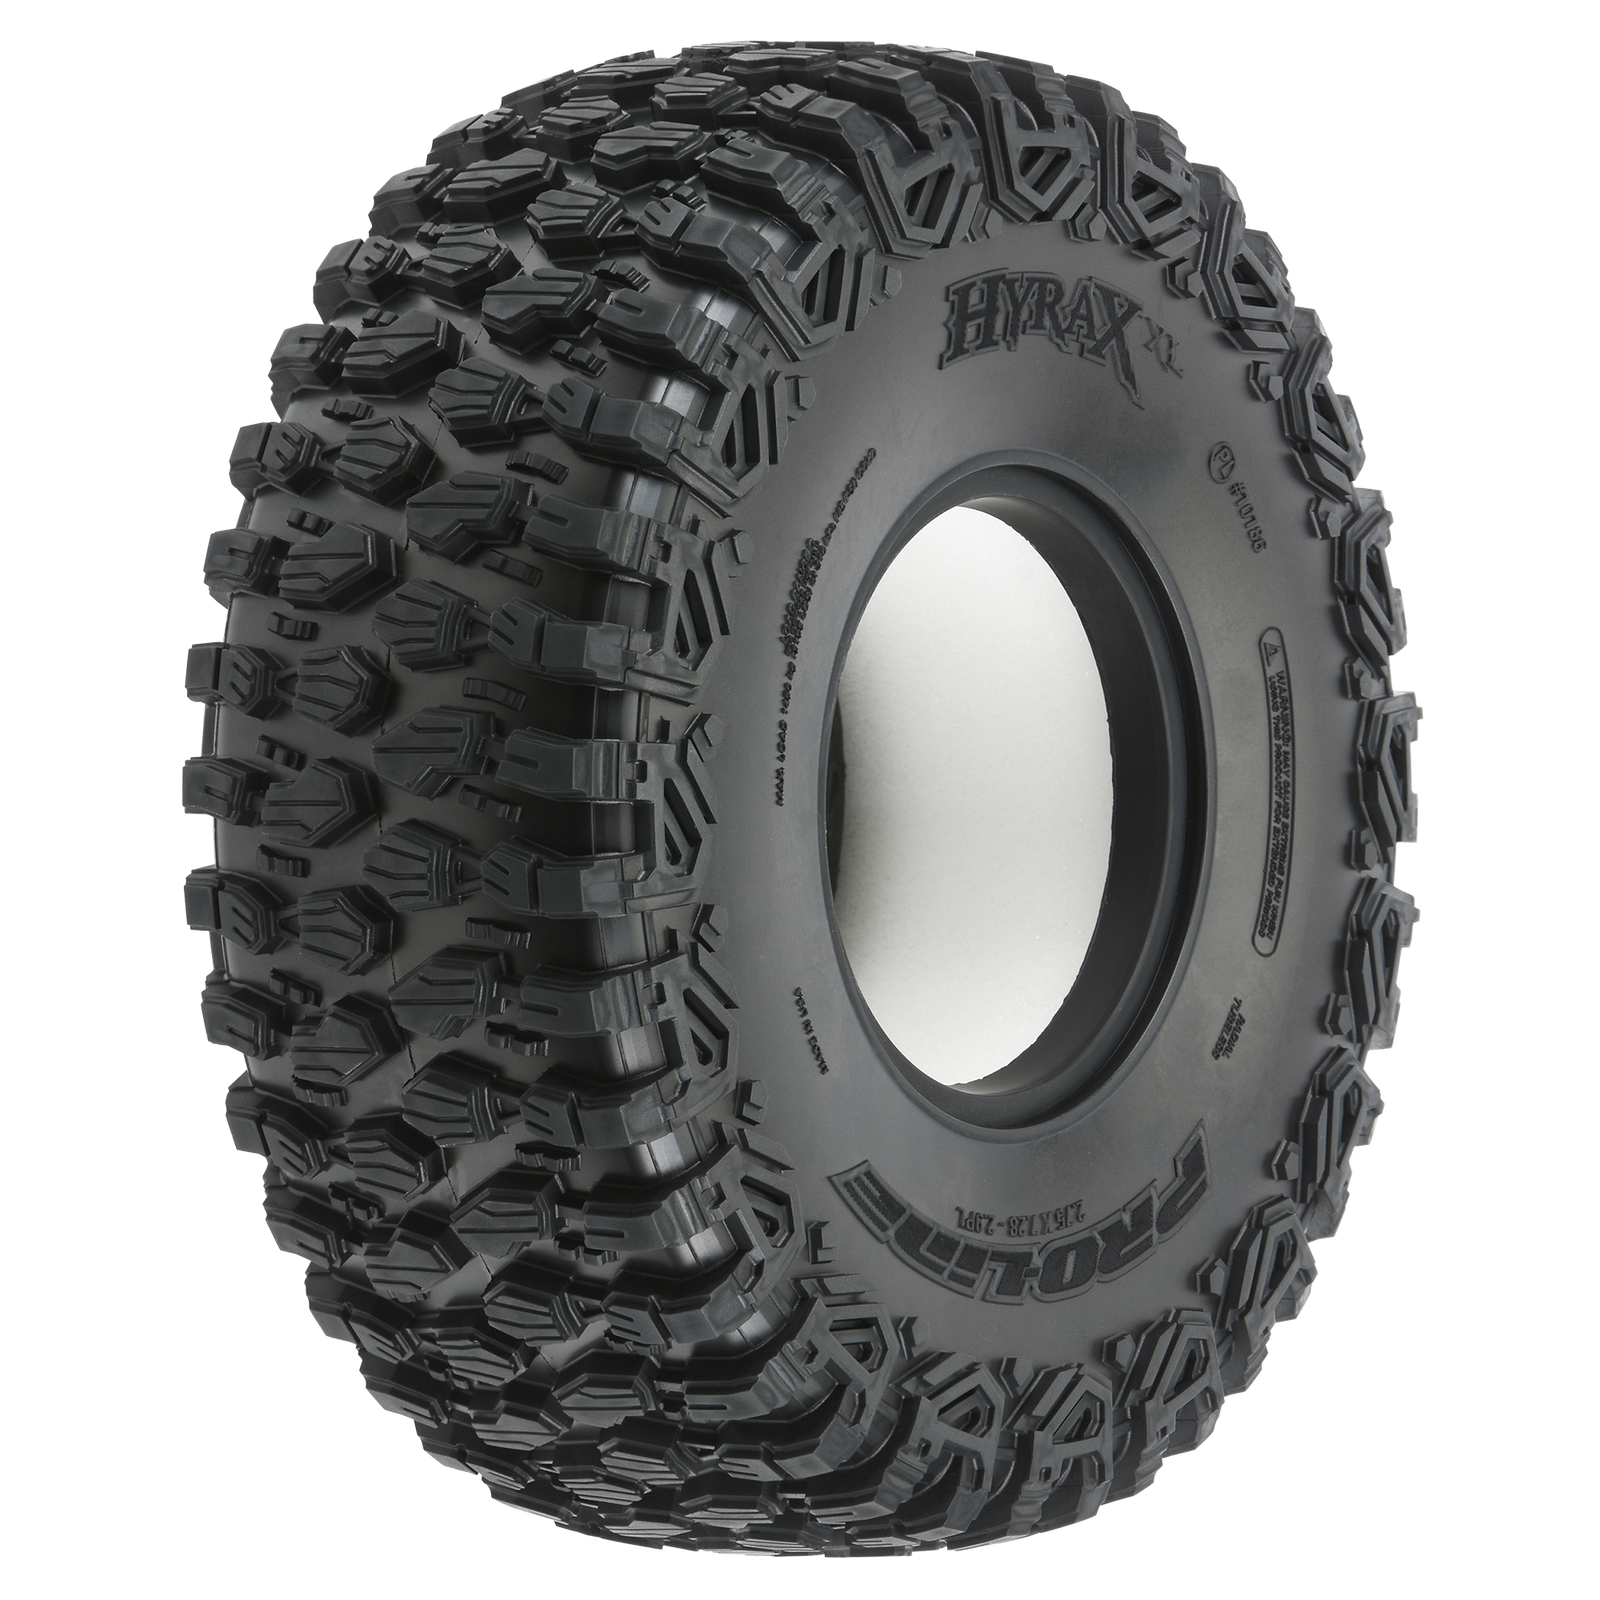 Pro-Line 1/6 Hyrax XL Front/Rear All Terrain Losi Super Rock Rey Tires (2)